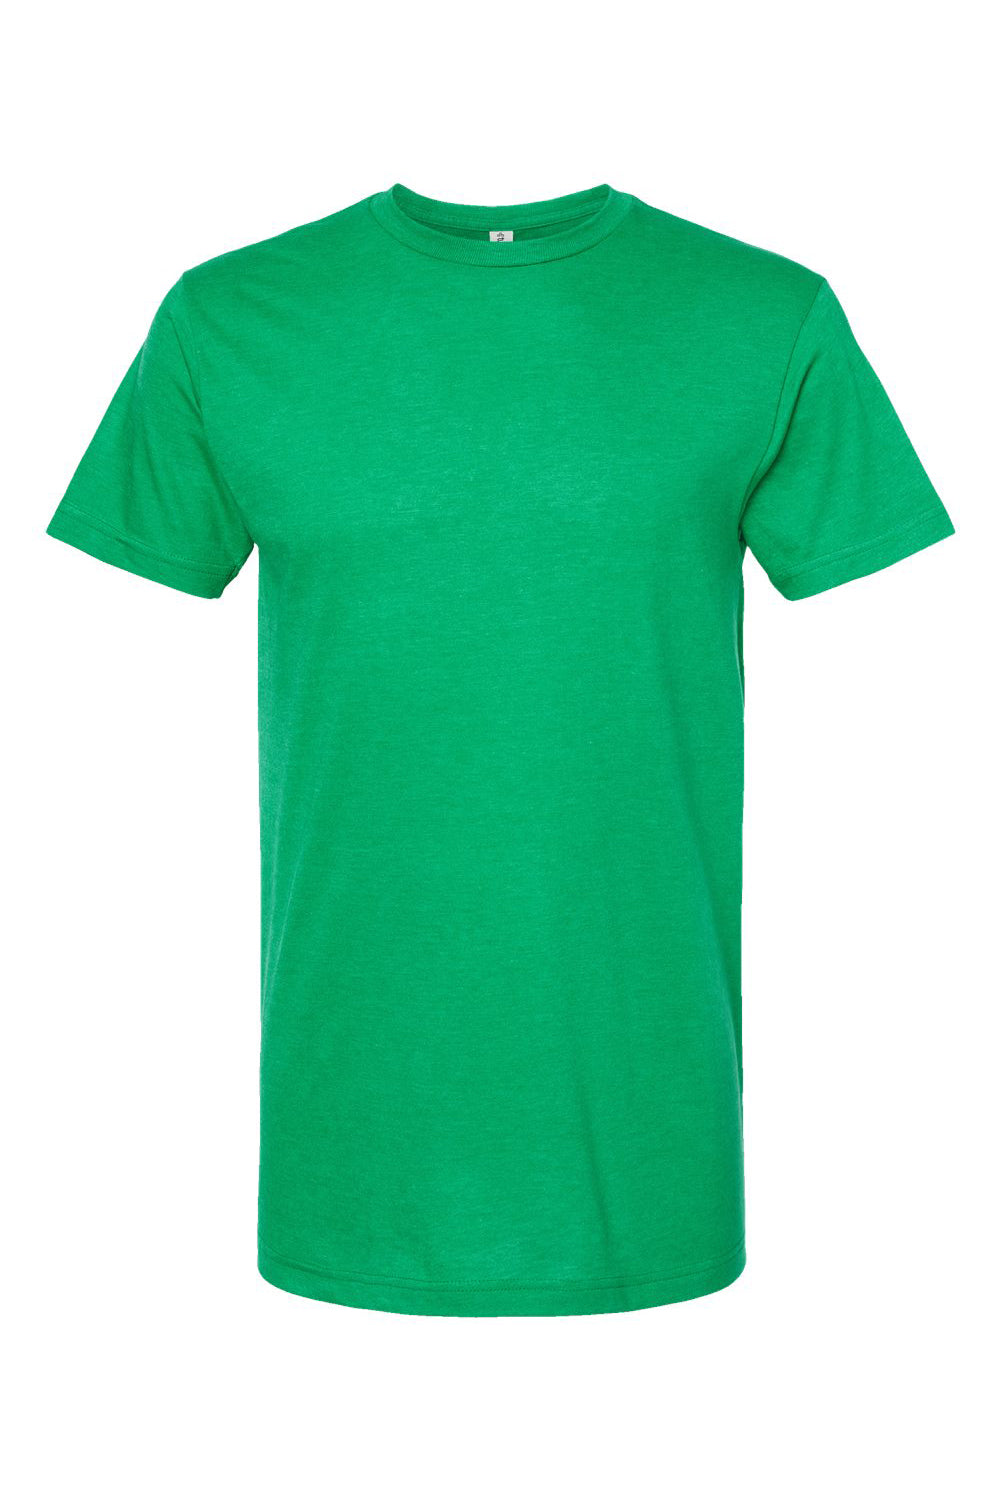 Tultex 202 Mens Fine Jersey Short Sleeve Crewneck T-Shirt Heather Kelly Green Flat Front